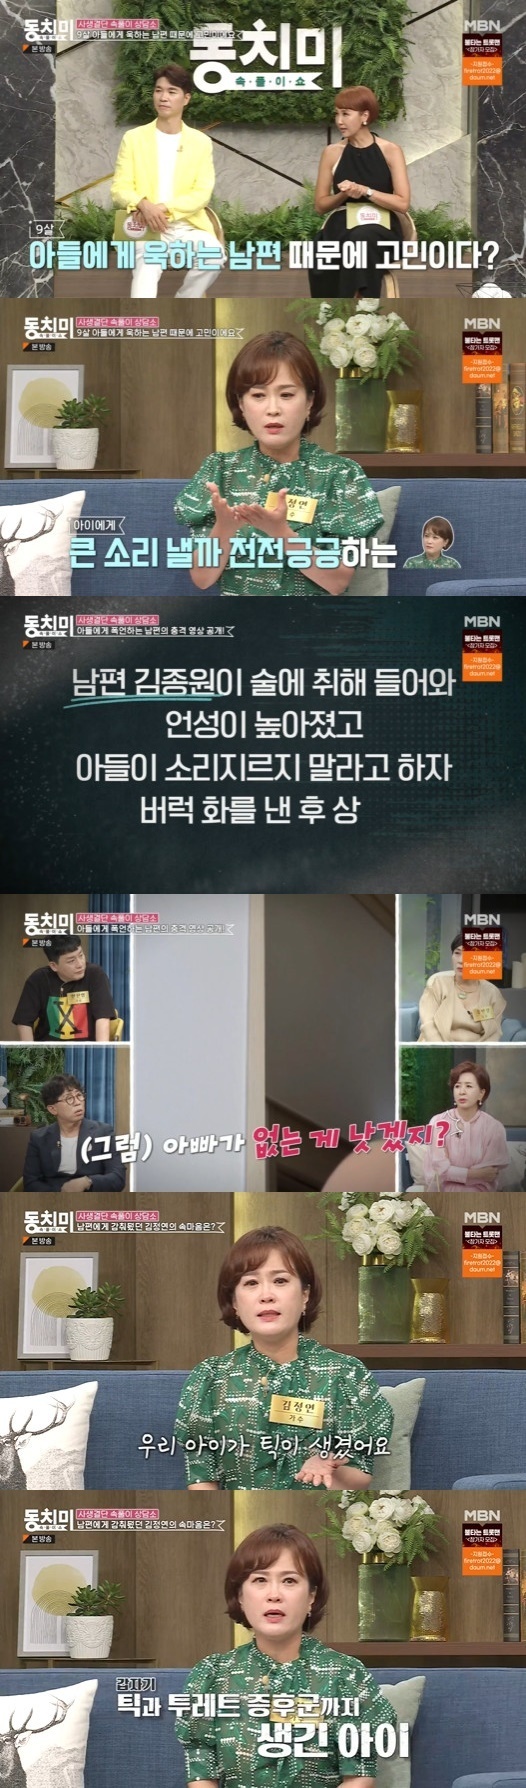 MBN '속풀이쇼 동치미' 방송 화면 캡처 © 뉴스1